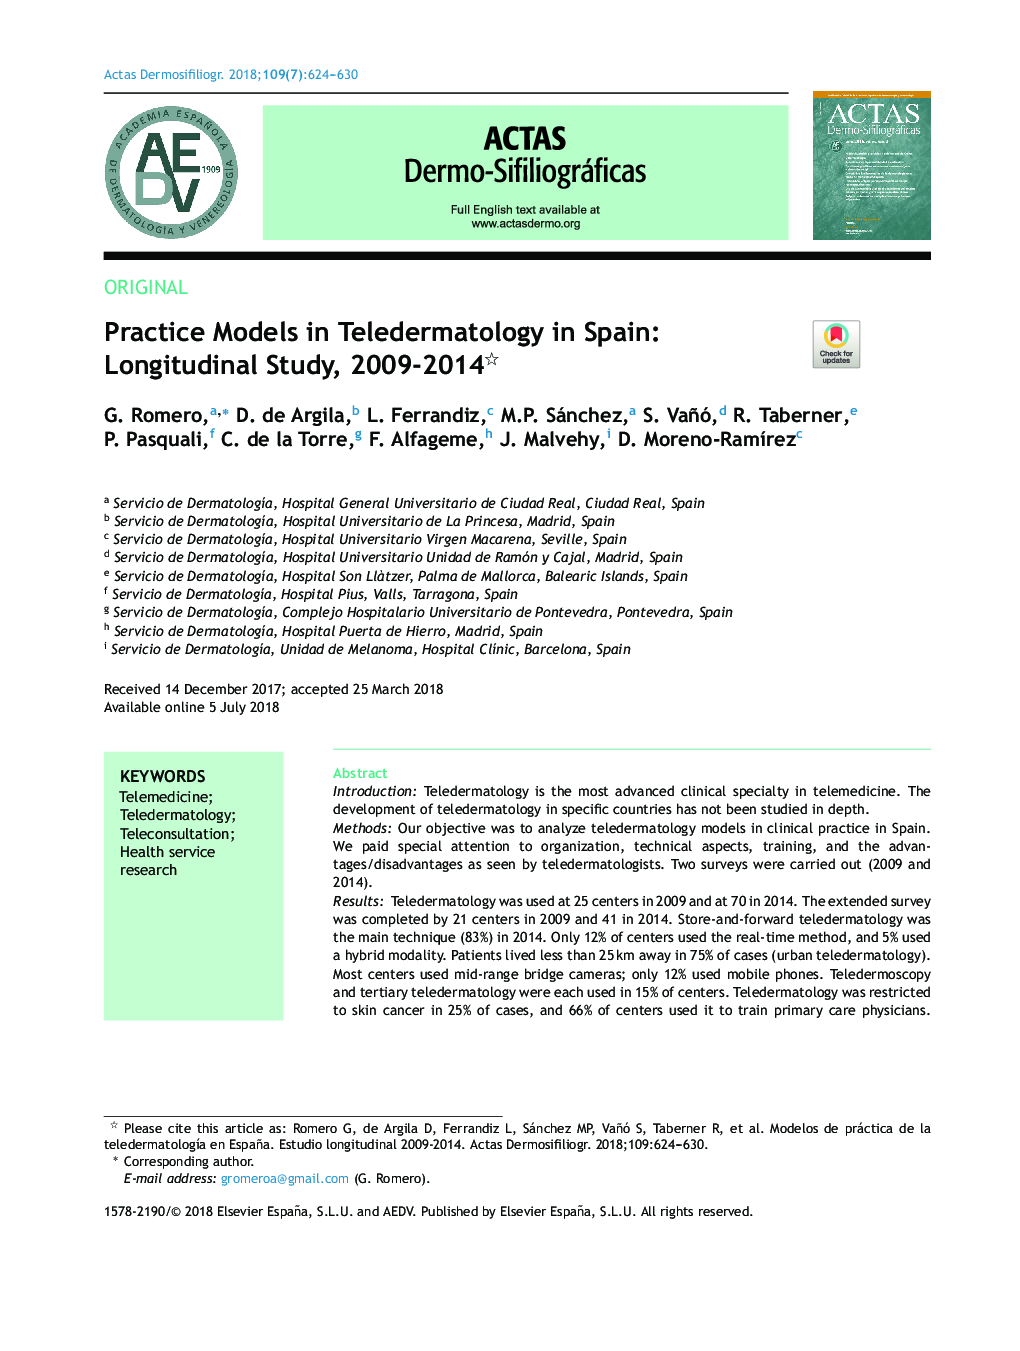 Practice Models in Teledermatology in Spain: Longitudinal Study, 2009-2014